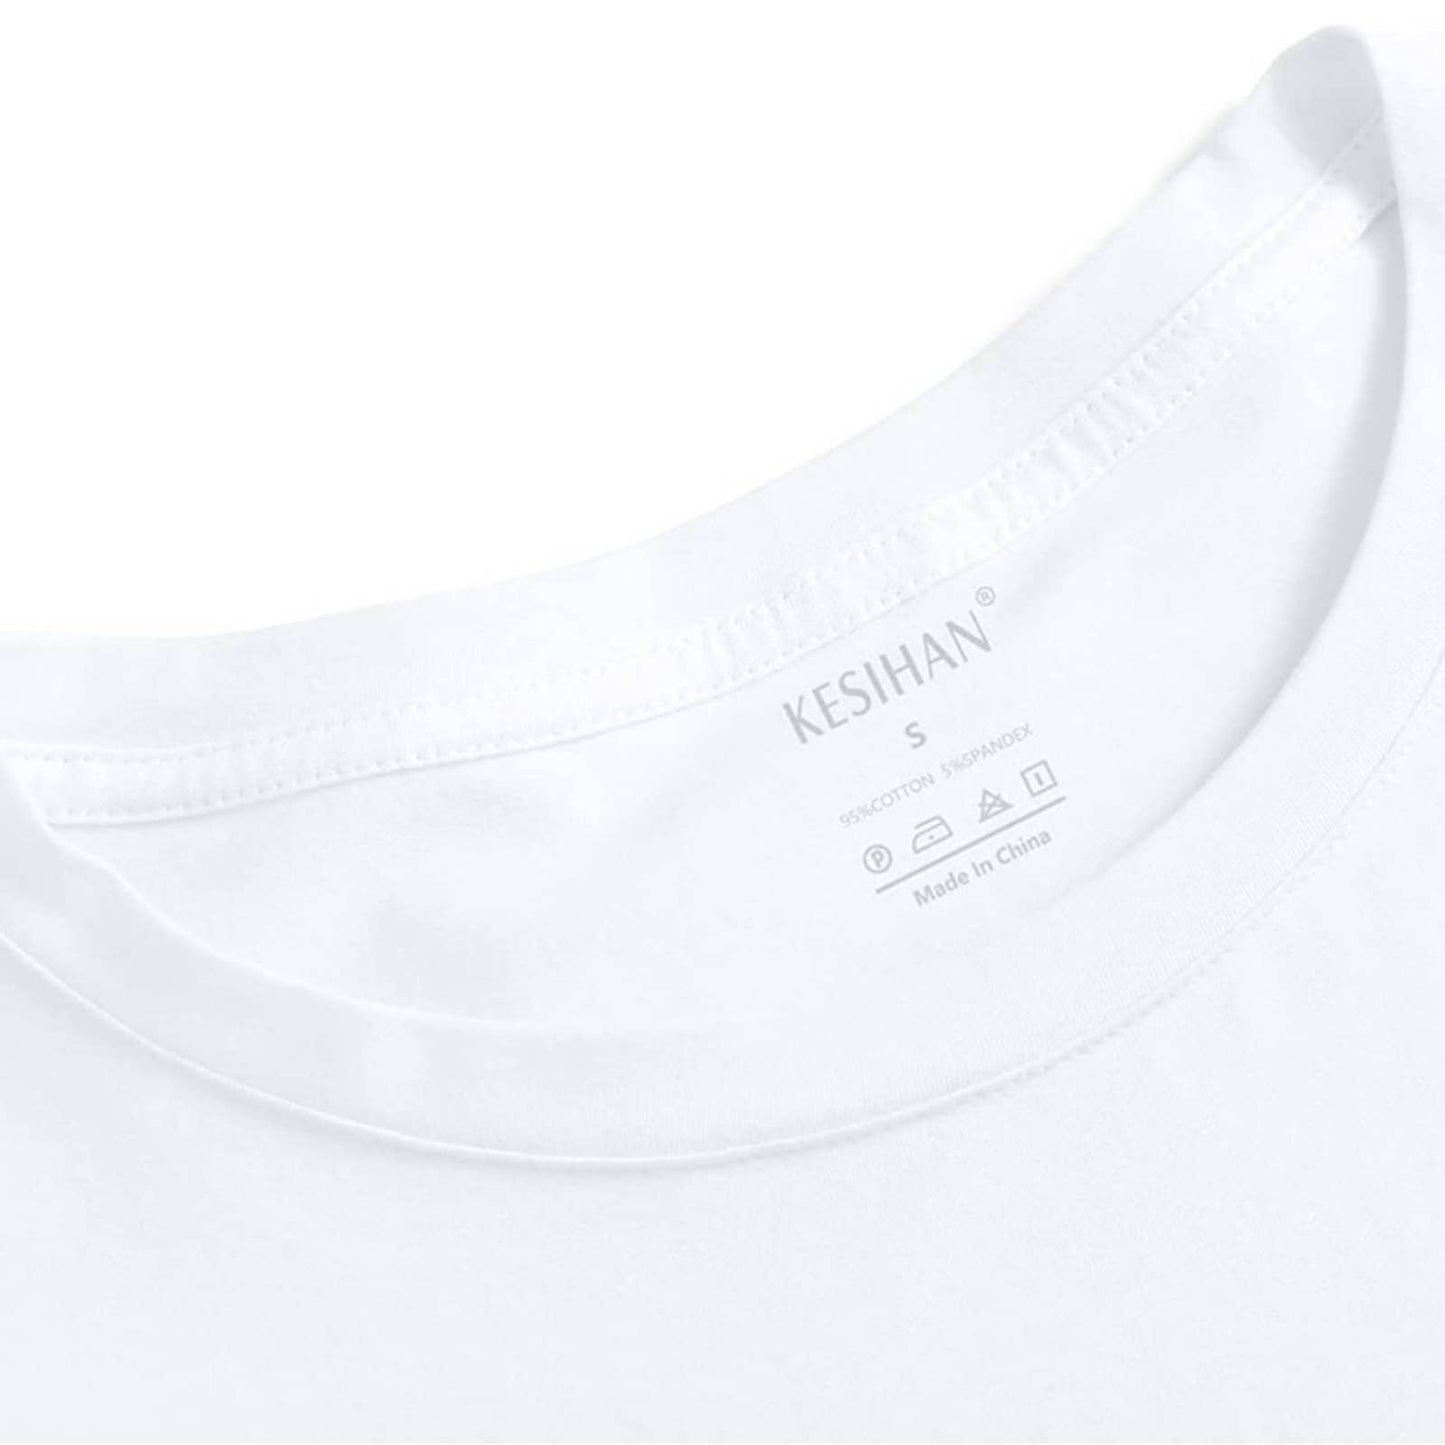 KESIHAN Men's Casual Cotton Spandex Striped Crewneck T-Shirt SM